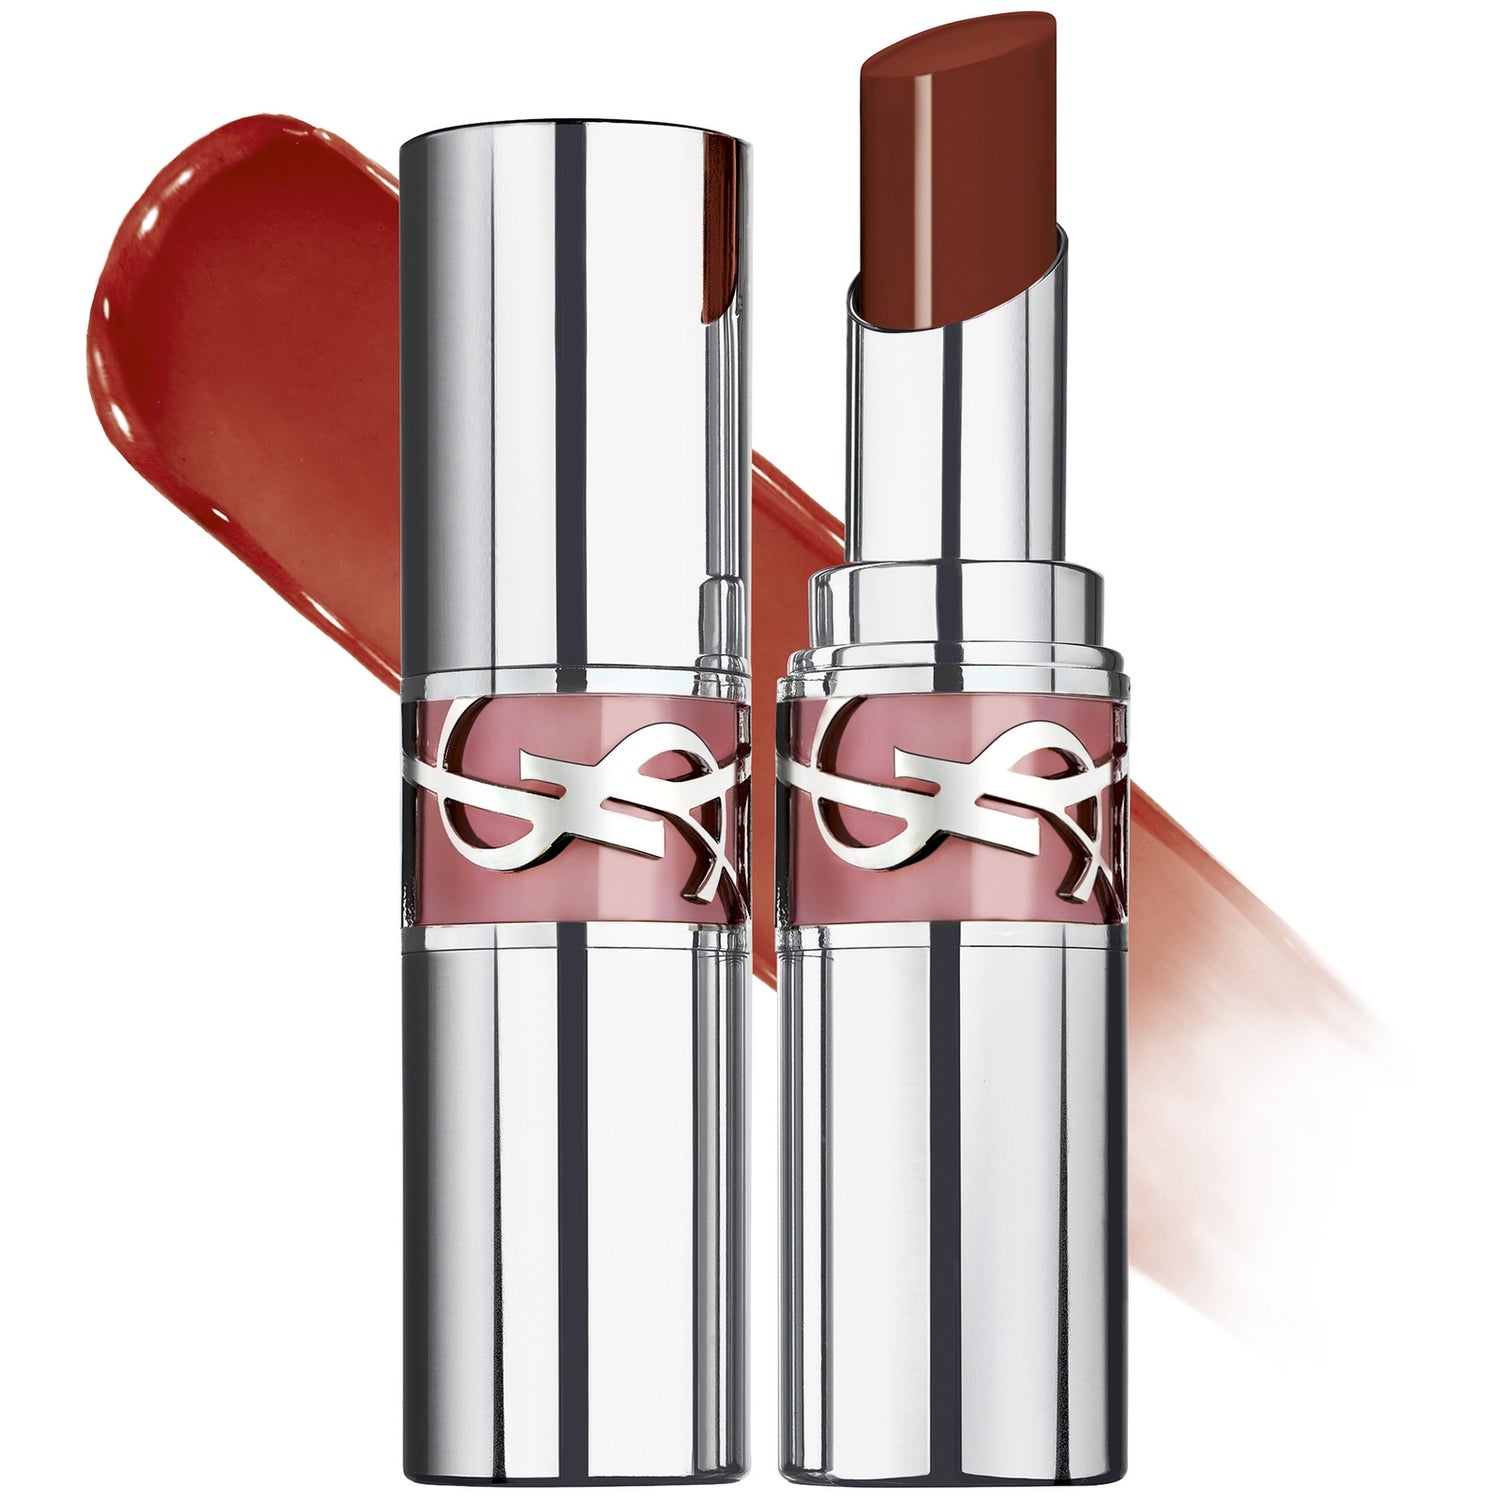 Yves Saint Laurent Loveshine Lipstick 3.2ml (Various Shades)